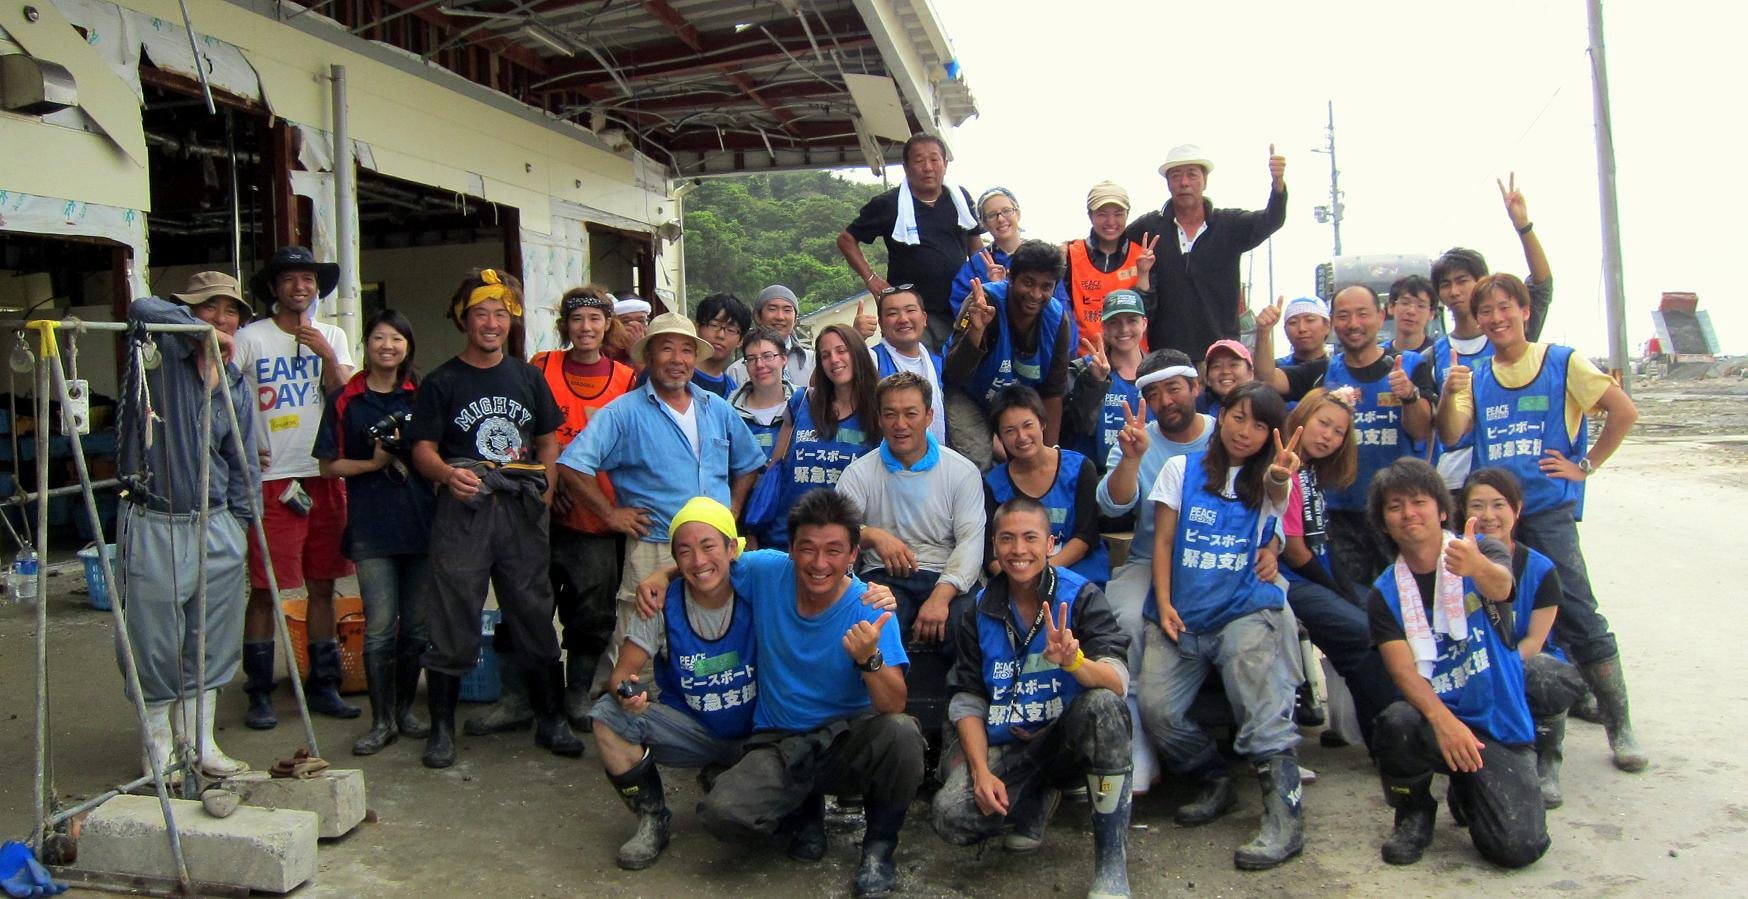 Japan, Ishinomaki, Kobuchi-hama, Kobuchihama, fishermen, team, volunteer, volunteering, group, 2011, 3.11, March 11, tsunami, earthquake, recovery, efforts